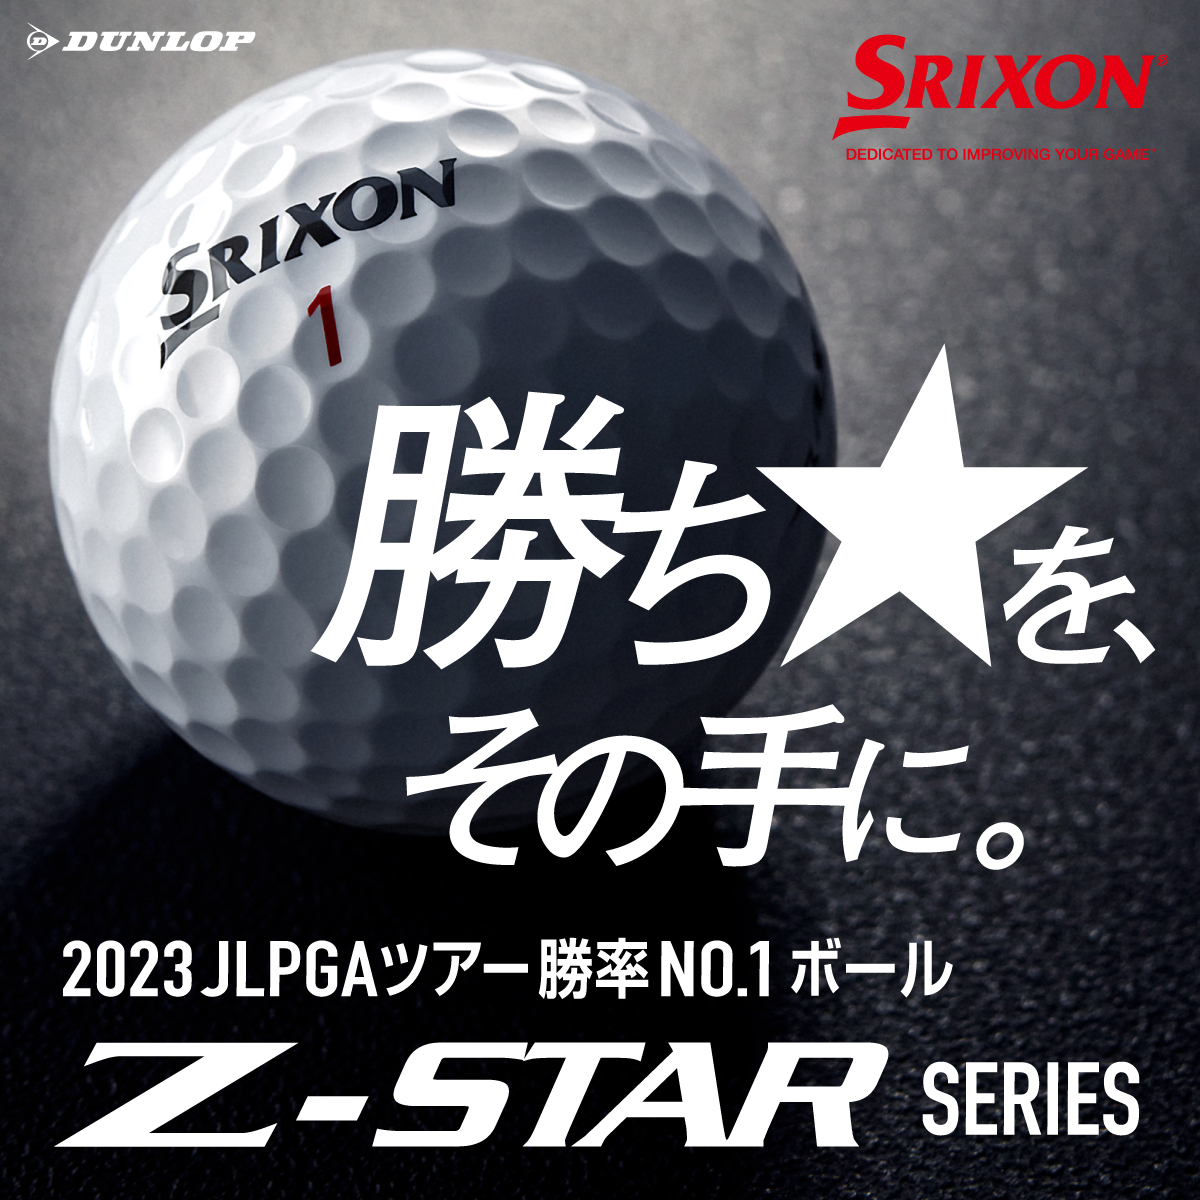 DUNLOP SPIXON 勝ち★をその手に。 2023JLPGAツアー勝率NO.1ボール Z-STAR SERIES